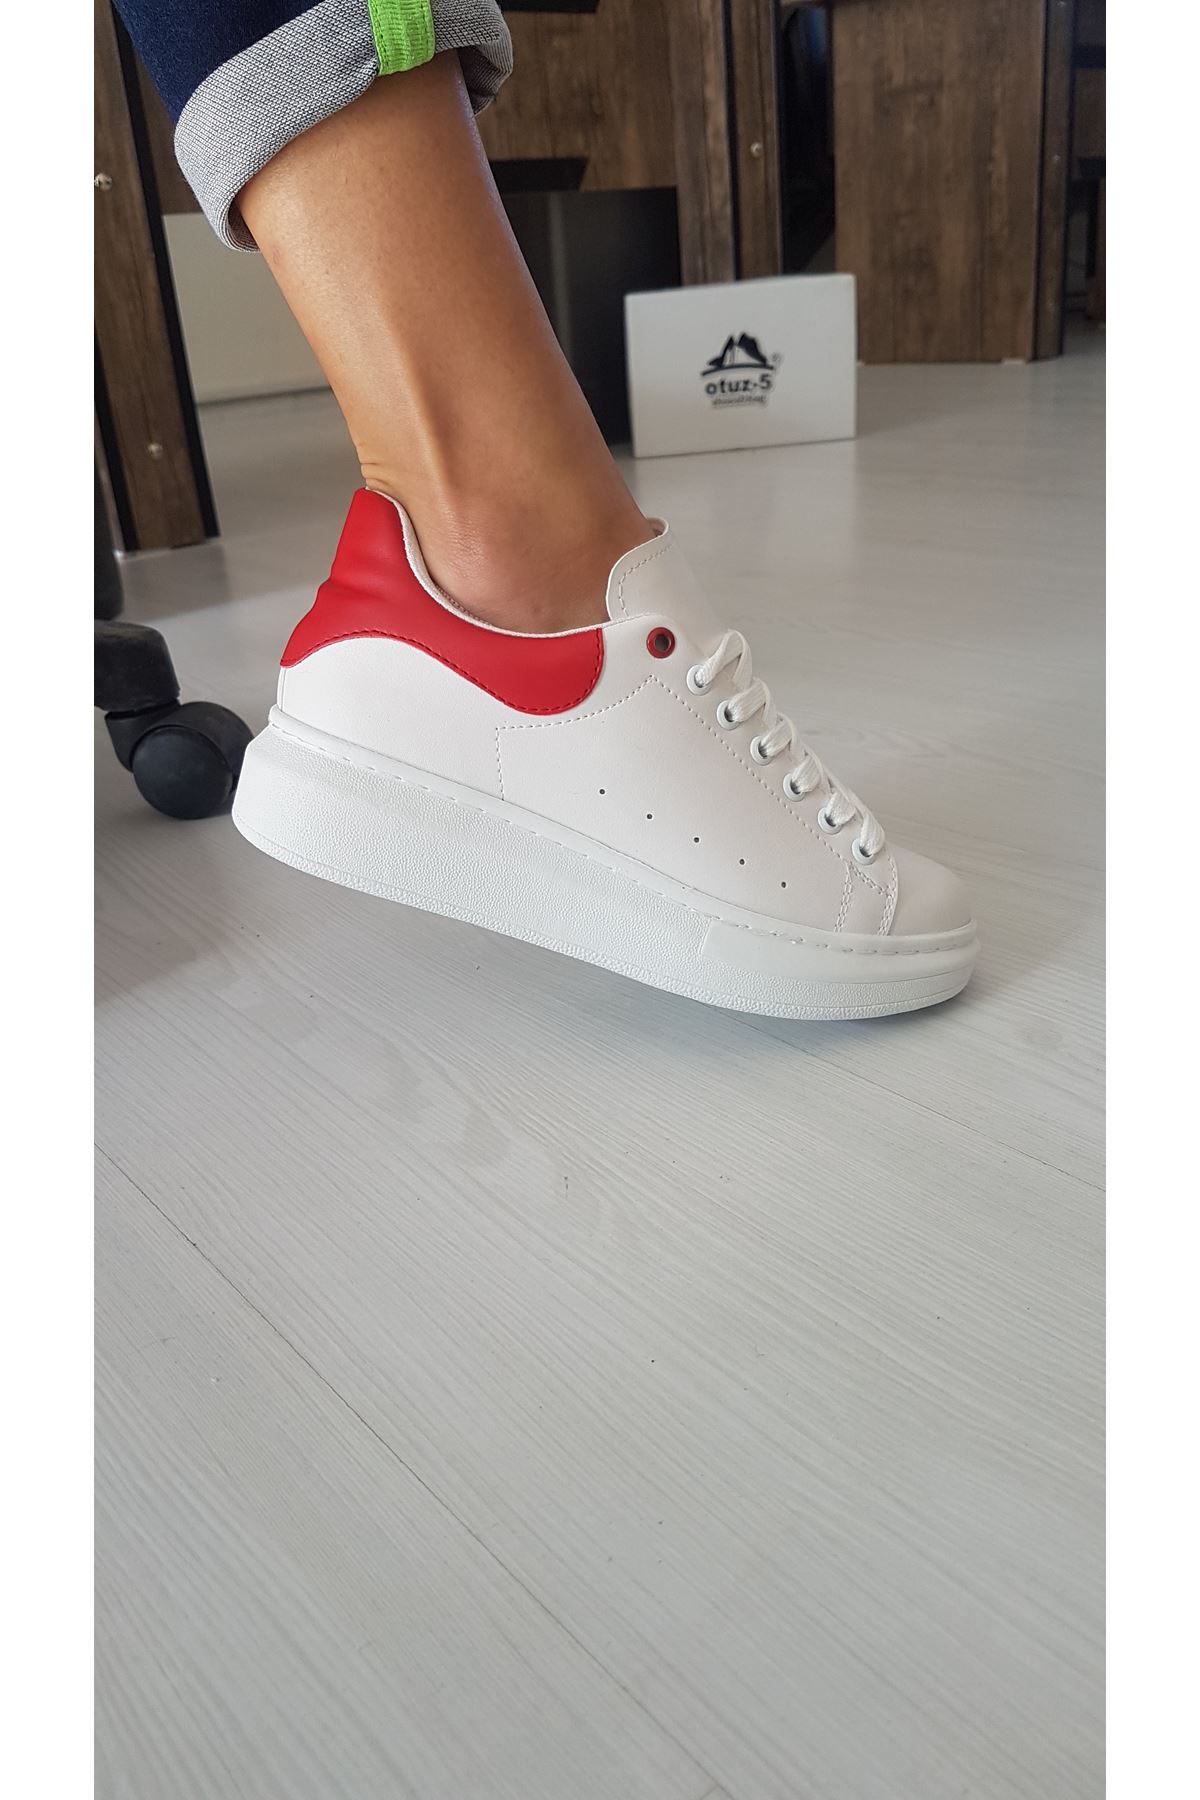 Lucy Mat Deri Kırmızı Detay Sneakers Beyaz